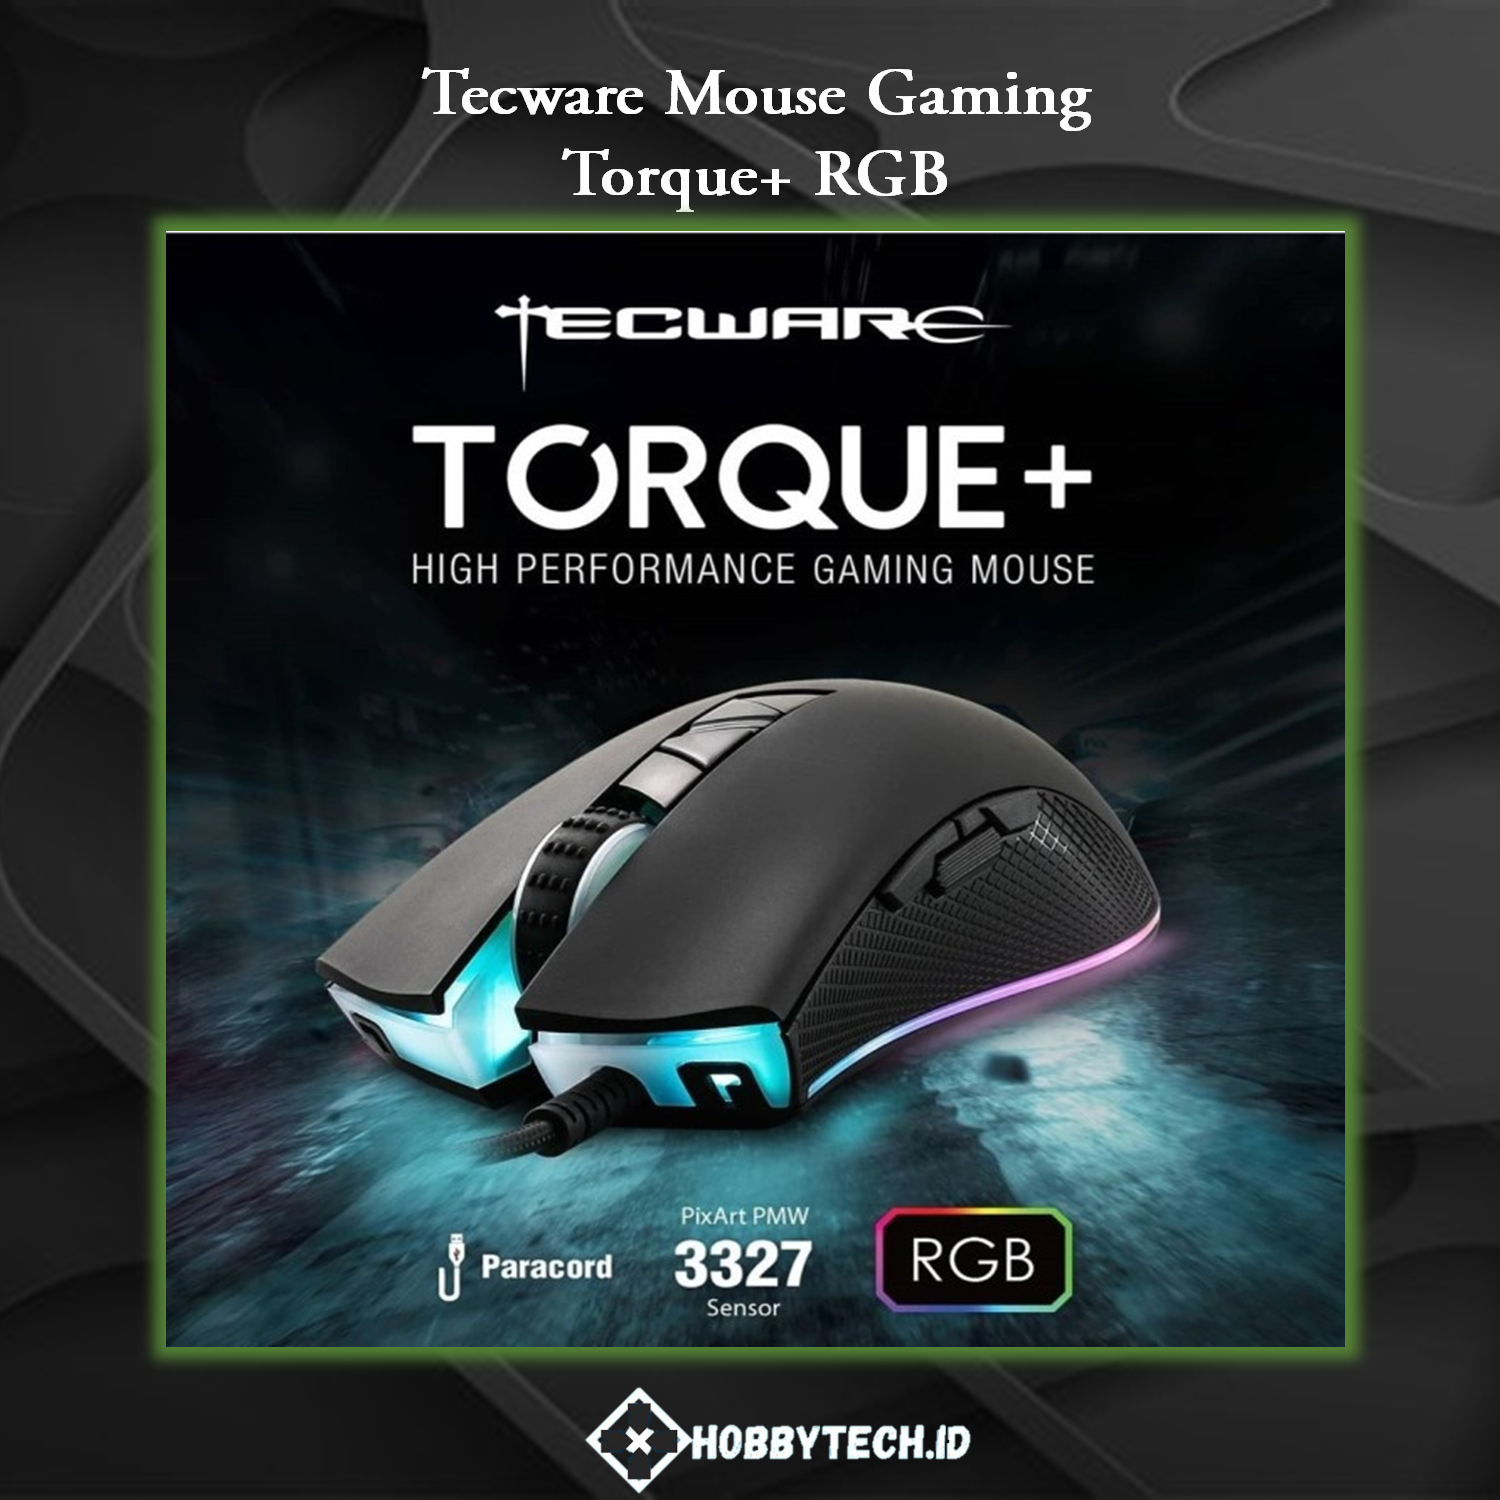 Tecware Torque+ RGB Gaming Mouse